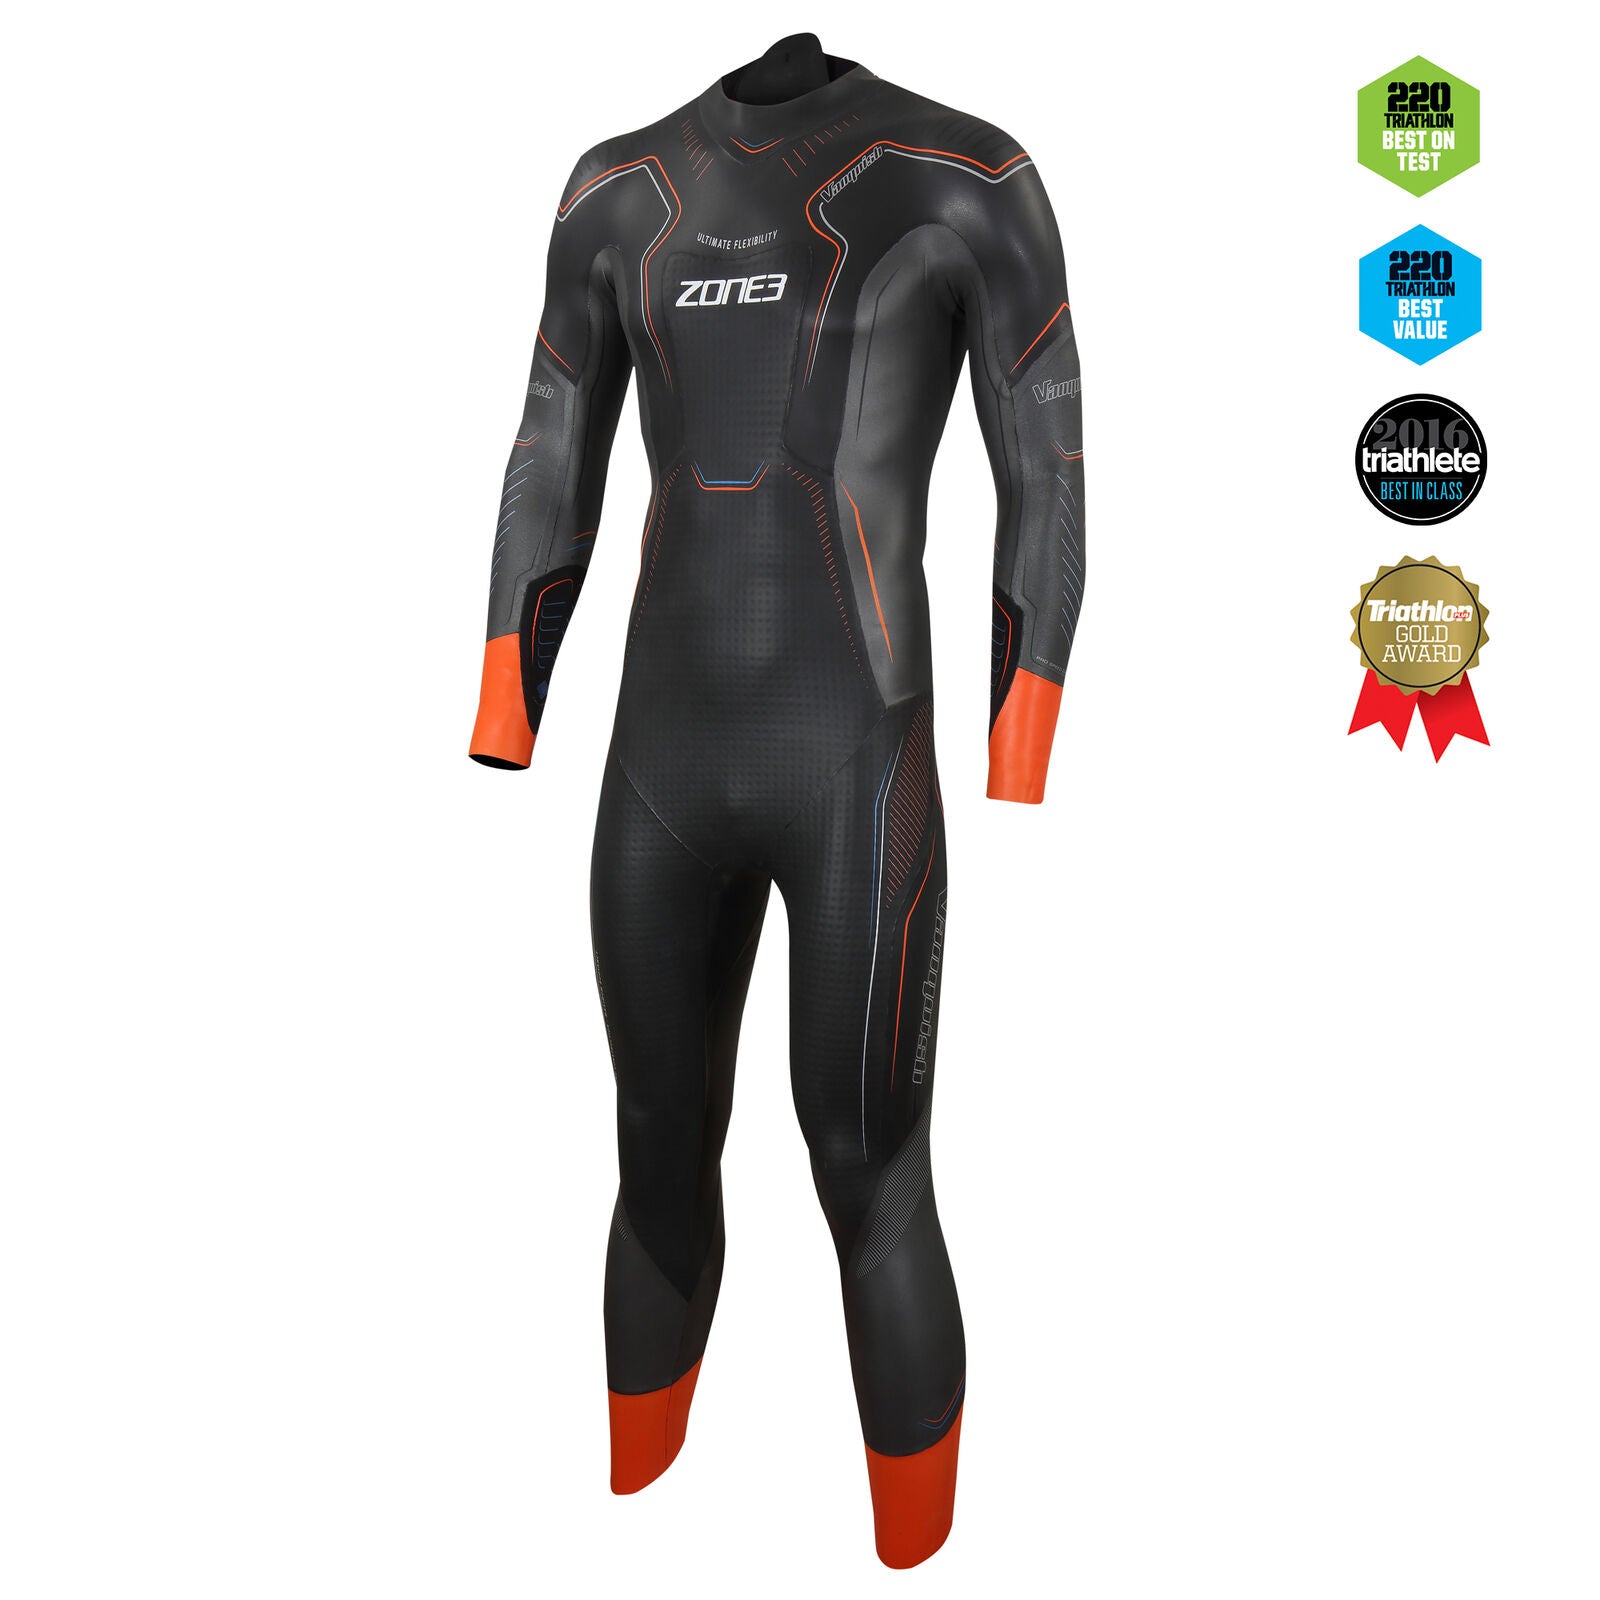 What do you wear under a wetsuit? - 220 Triathlon